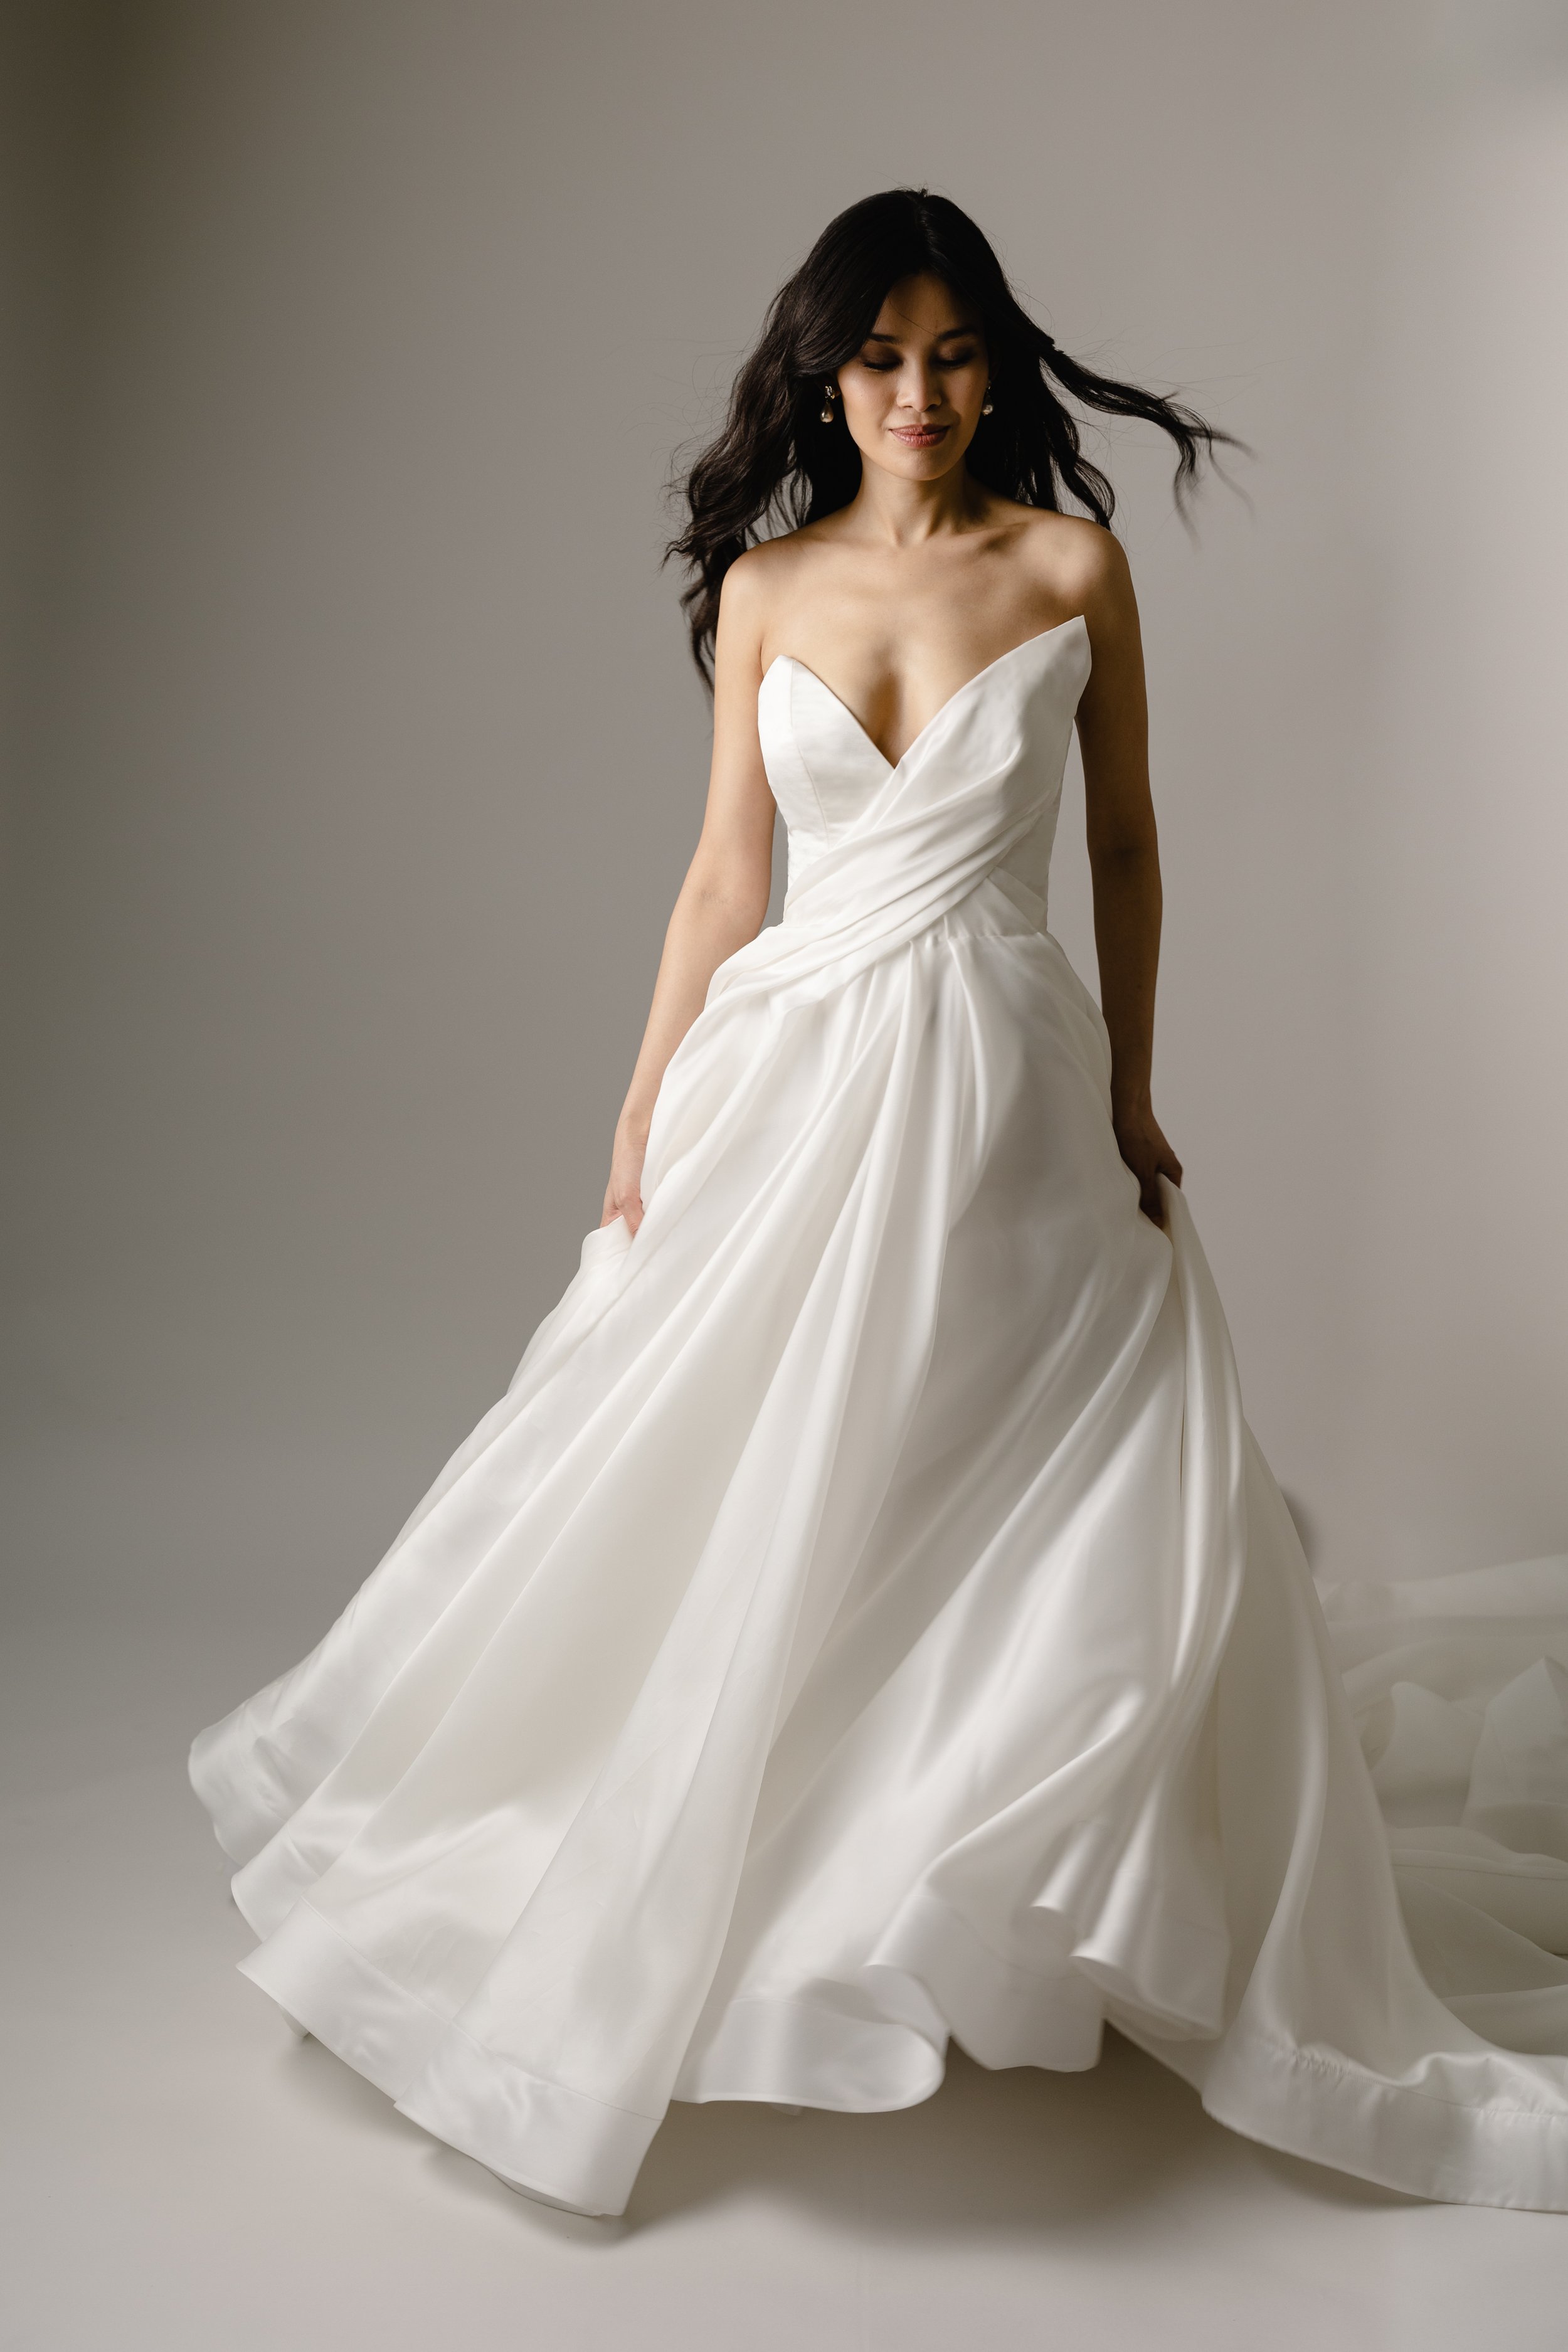 Aquarelle draped ballgown wedding dress3 web.jpg